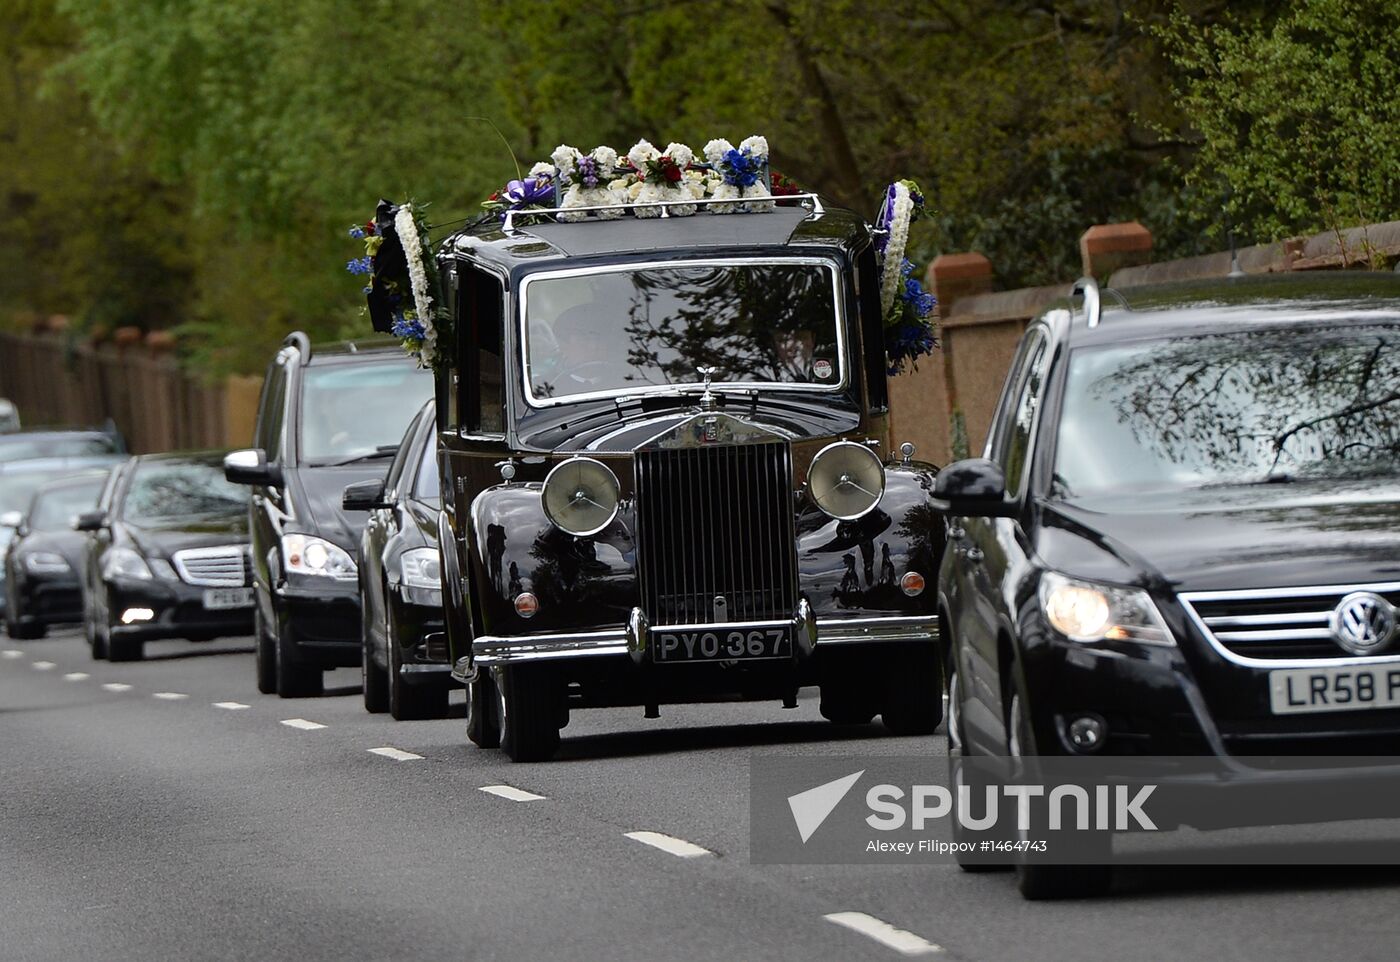 Funeral of Russian oligarch Boris Berezovsky in Surrey, England